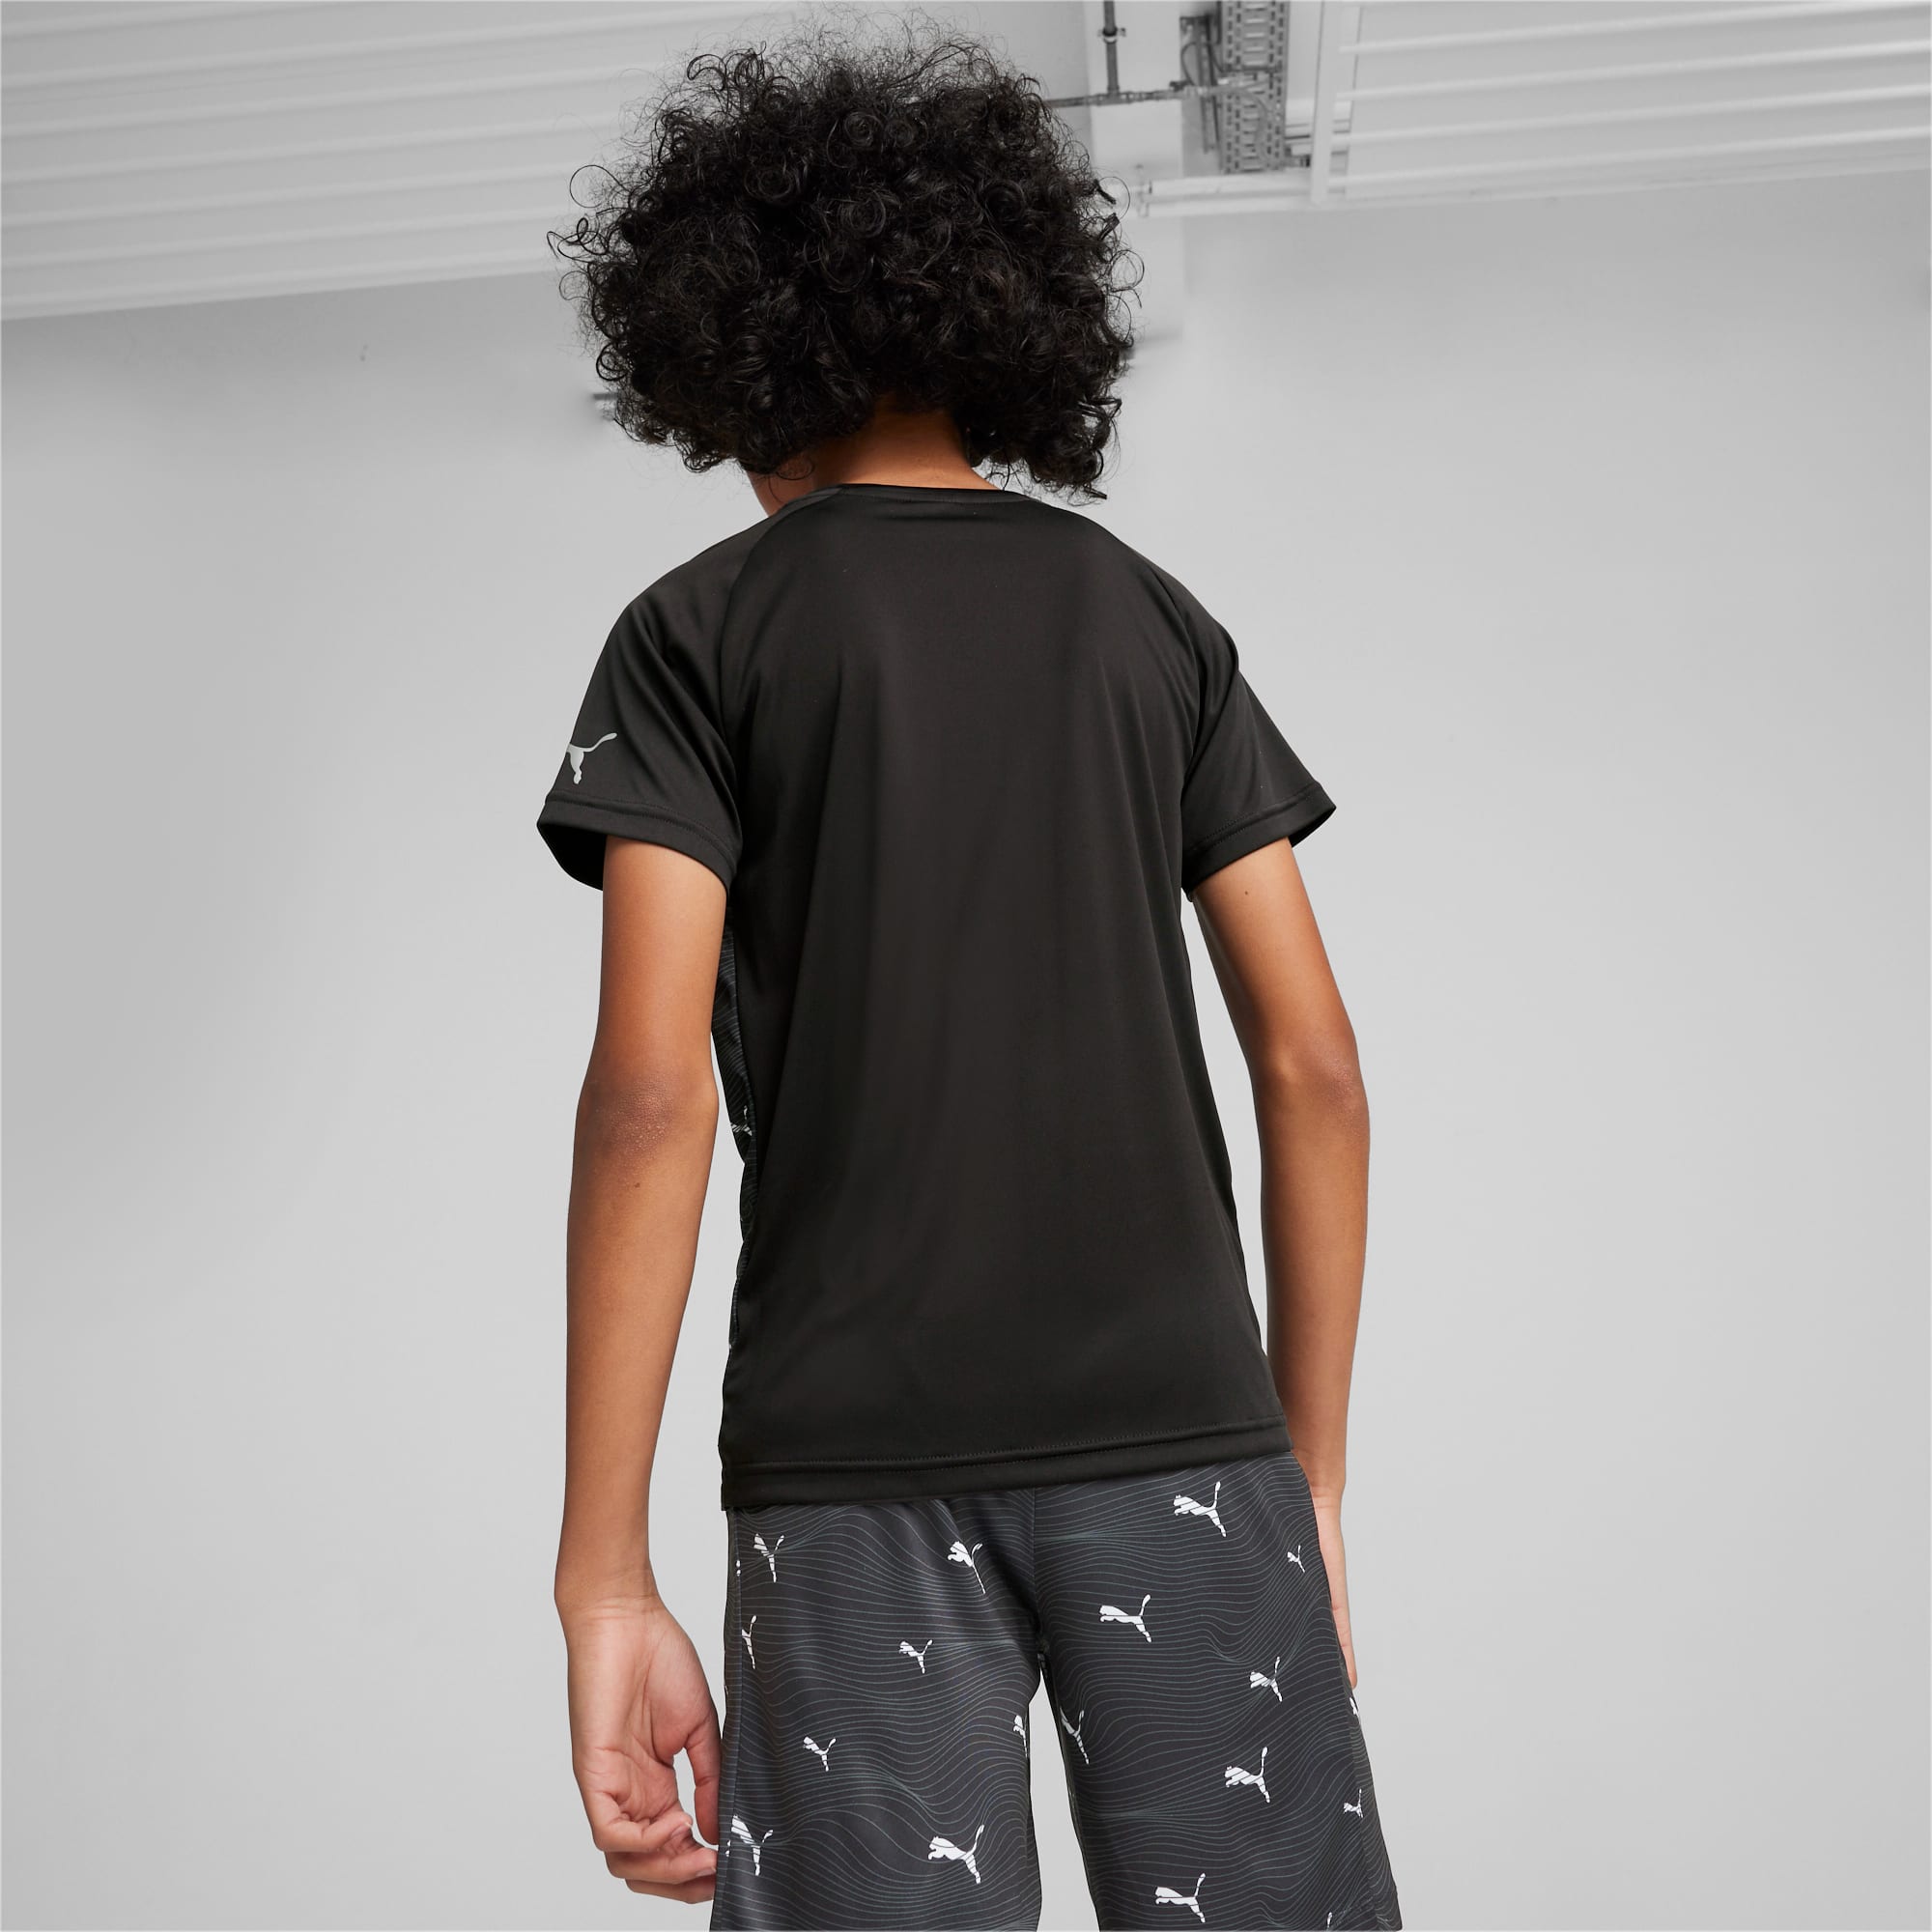 PUMA Active Sports Youth T-Shirt, Black, Size 116, Clothing